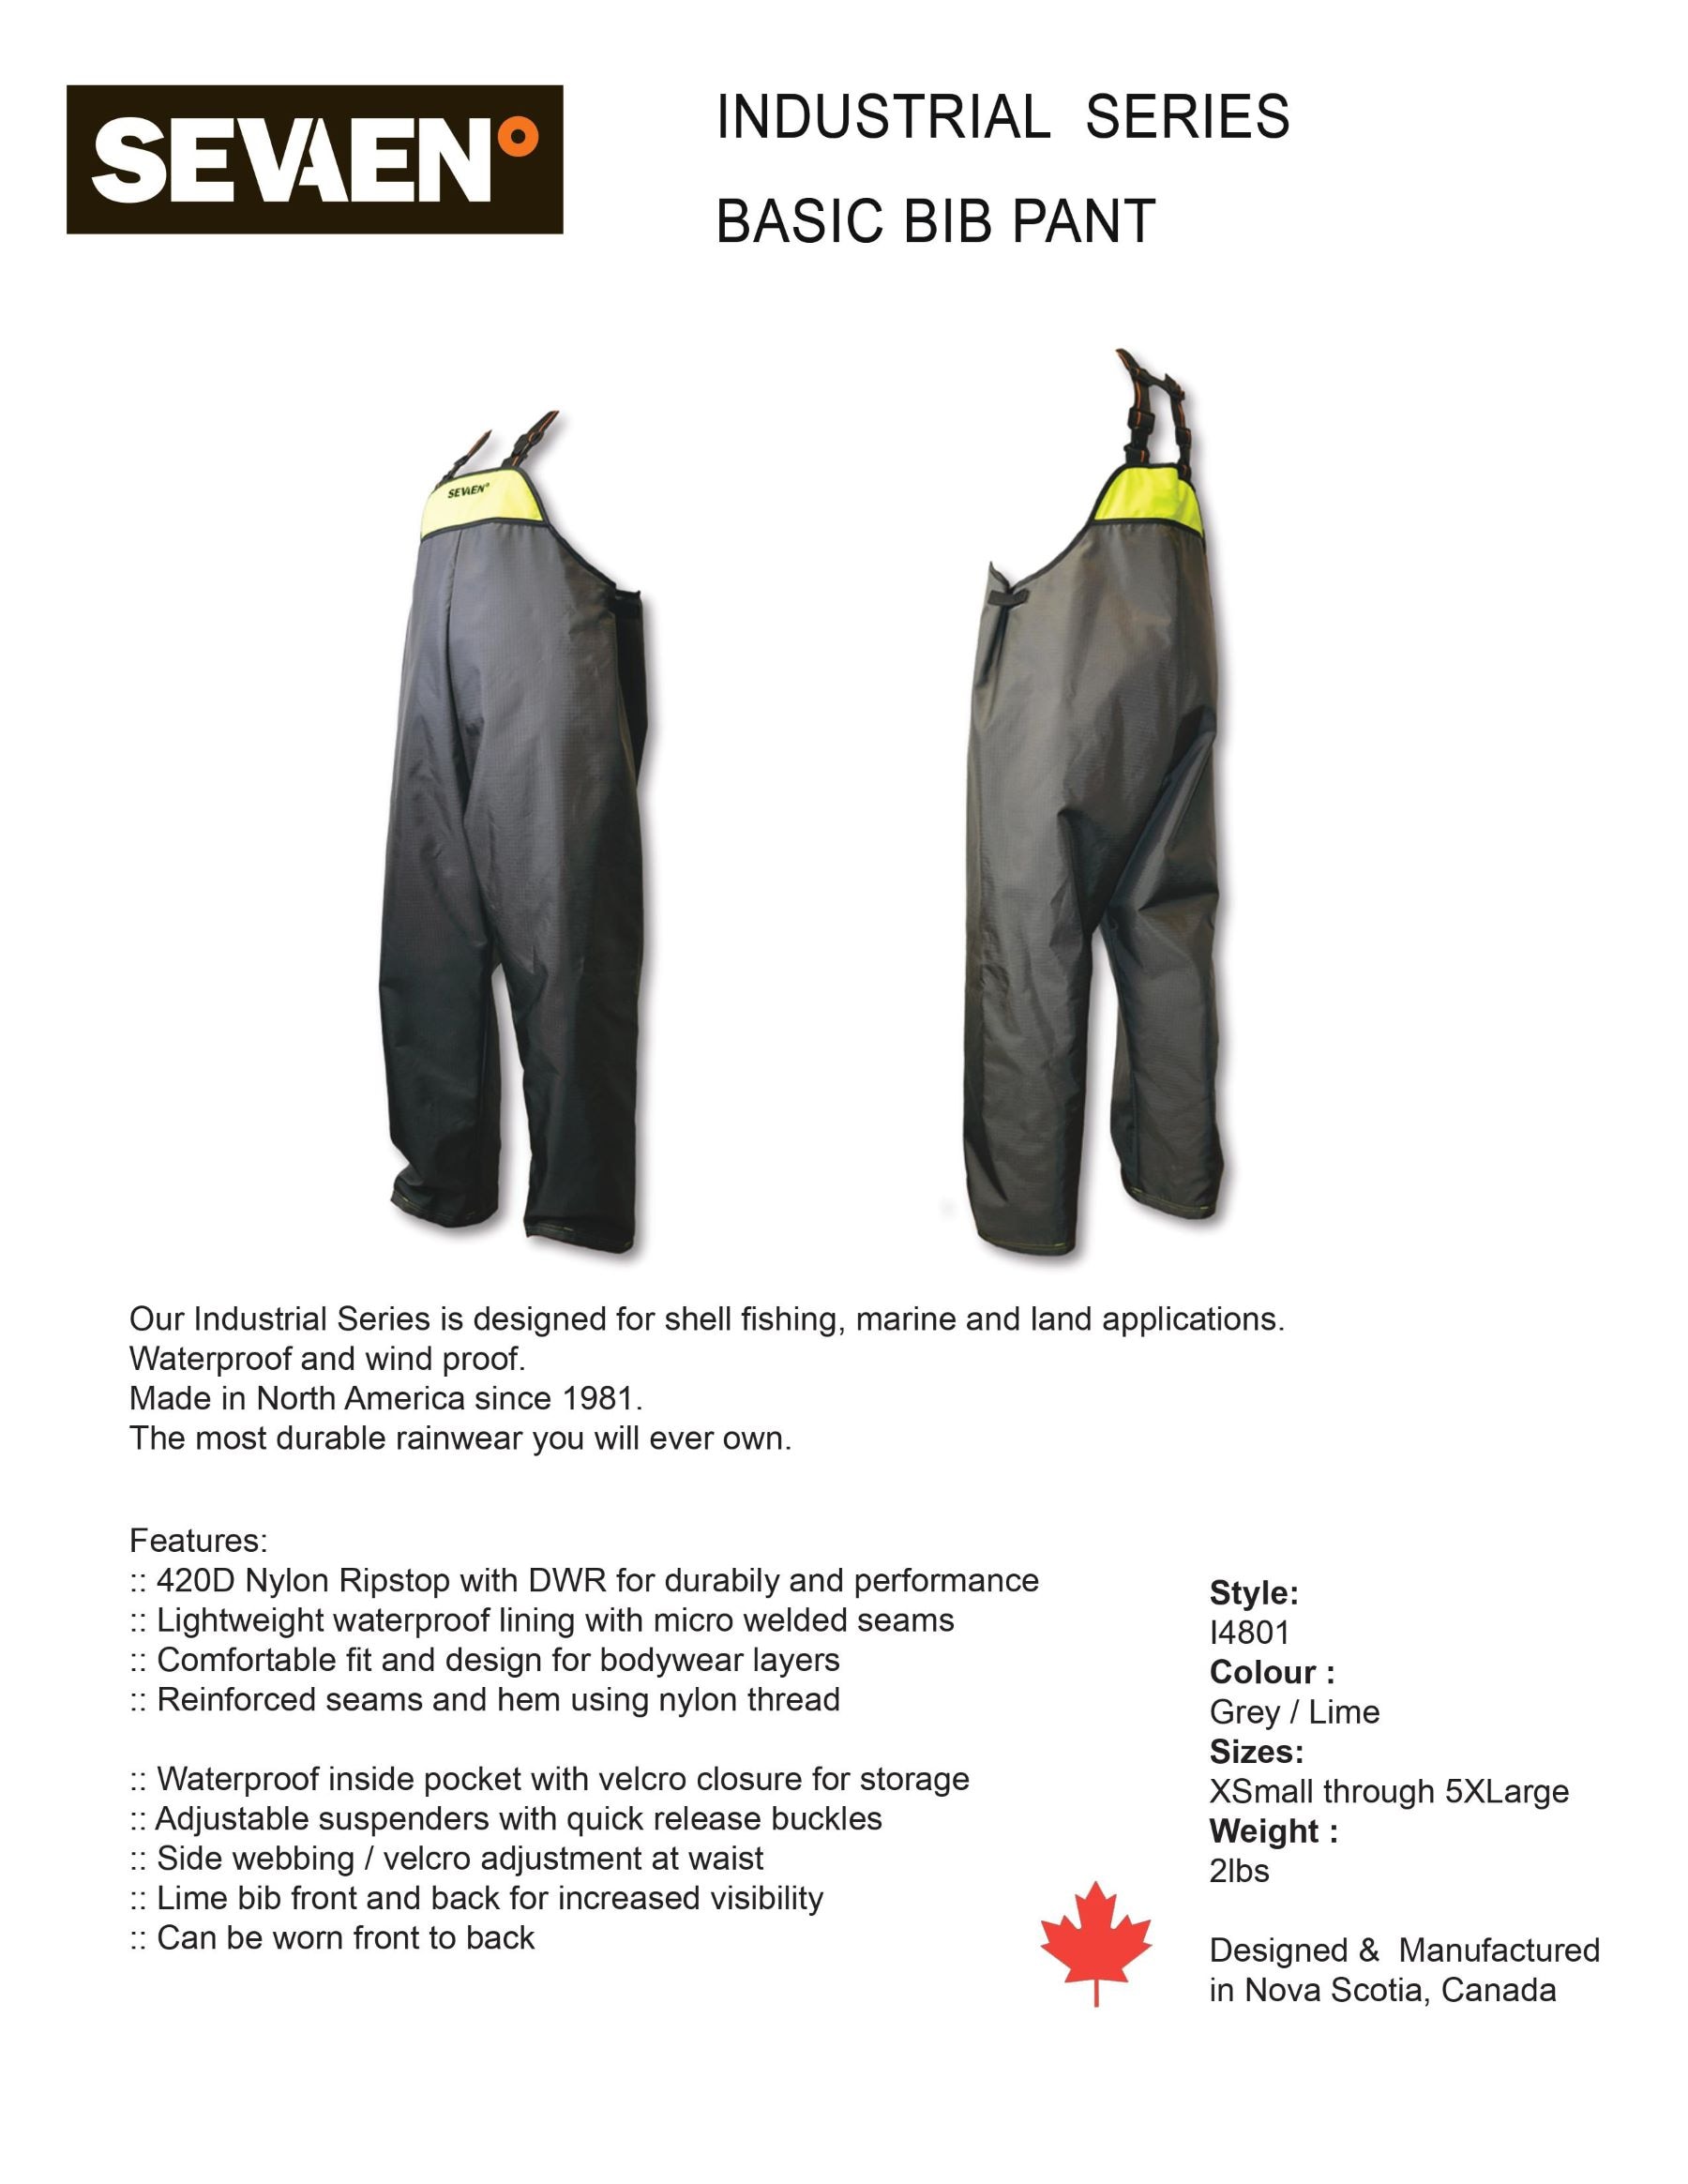 Sevaen Industrial unisex adult L/XL Bib Pants | I4801-XL